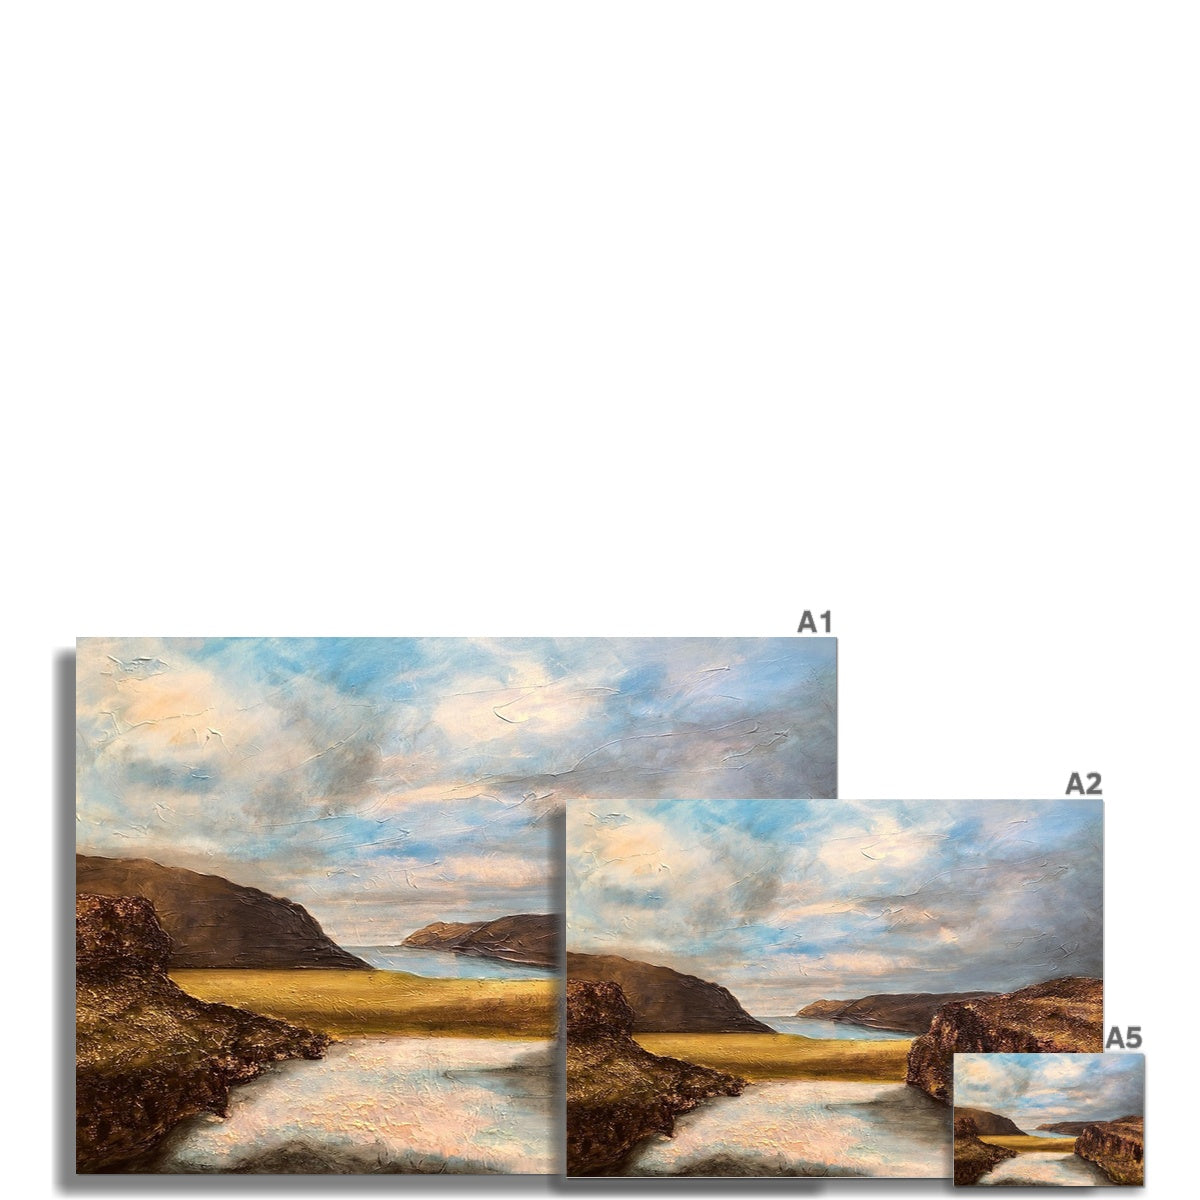 Westfjords Iceland Painting | Fine Art Prints From Scotland-Unframed Prints-World Art Gallery-Paintings, Prints, Homeware, Art Gifts From Scotland By Scottish Artist Kevin Hunter